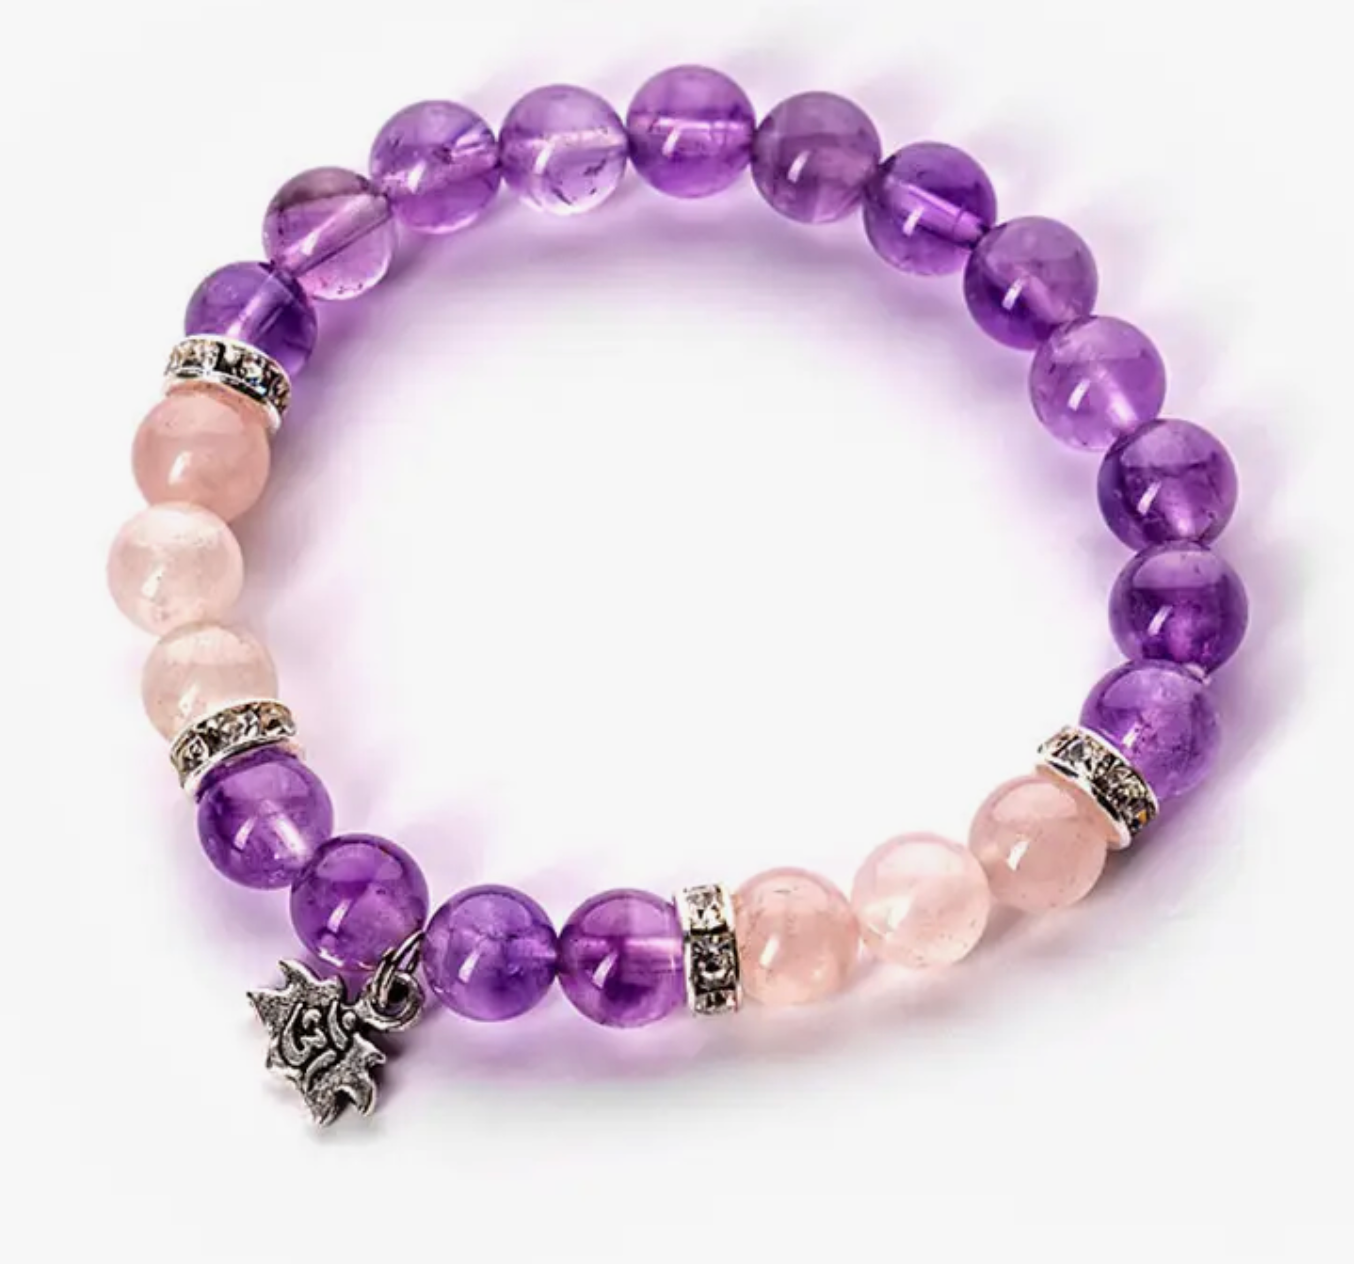 Tranquility Bracelet - Amethyst, Rose Quartz & Lotus Charm